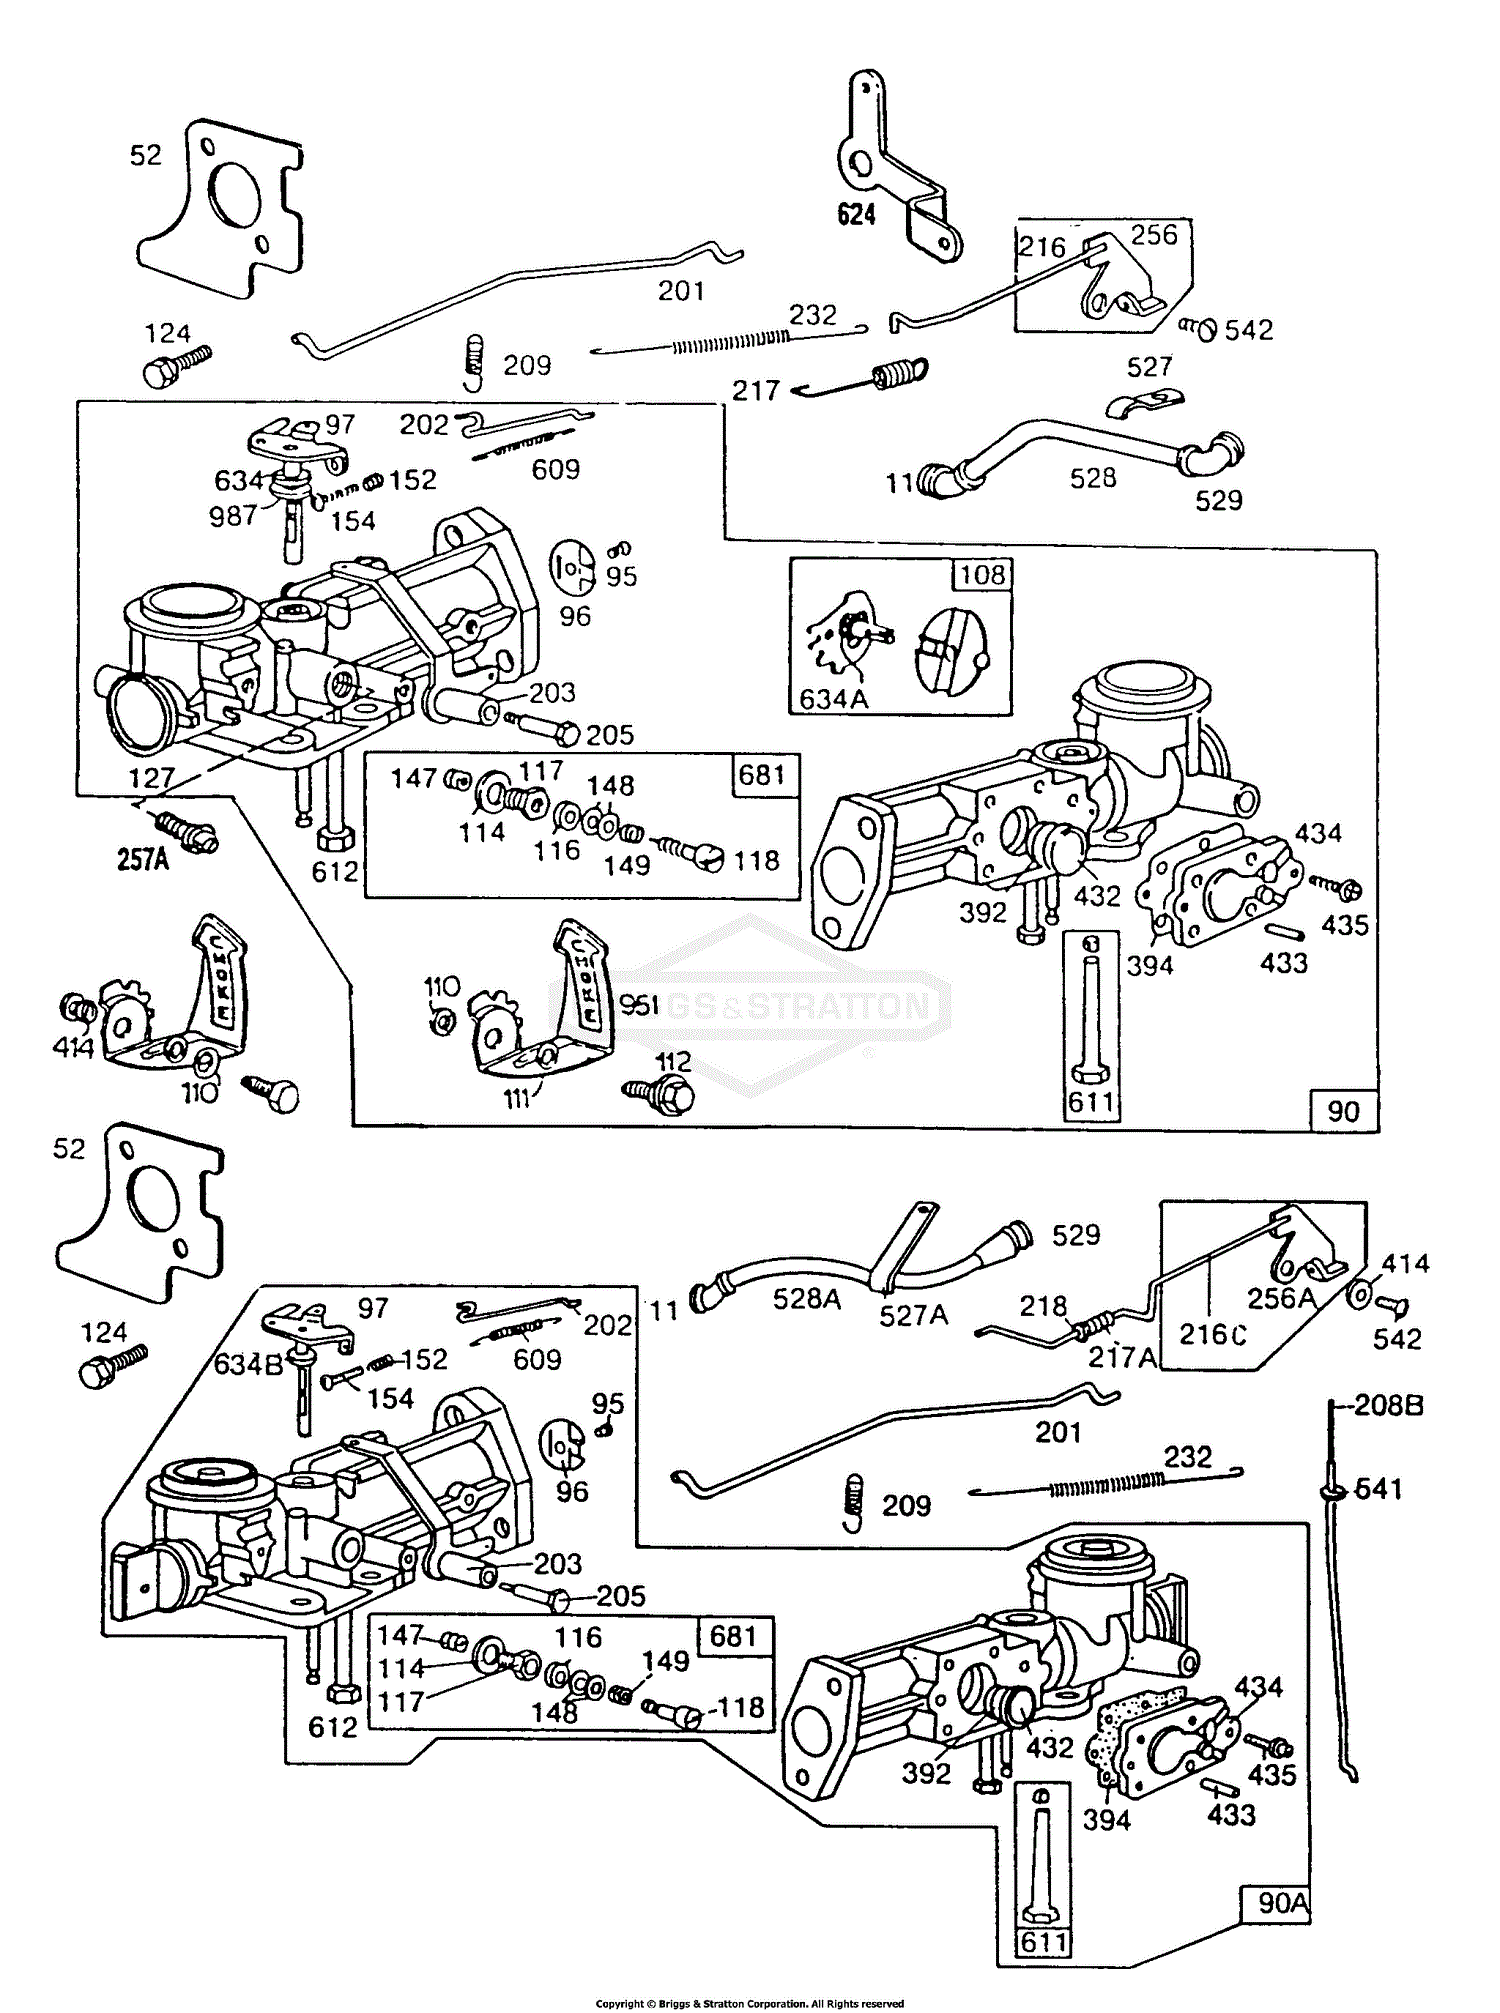 https://az417944.vo.msecnd.net/diagrams/manufacturer/briggs-stratton/briggs-stratton-engine/100000-19z999-series/112200-to-112299/112202-0687-01/carburetor-assemblies/diagram.gif